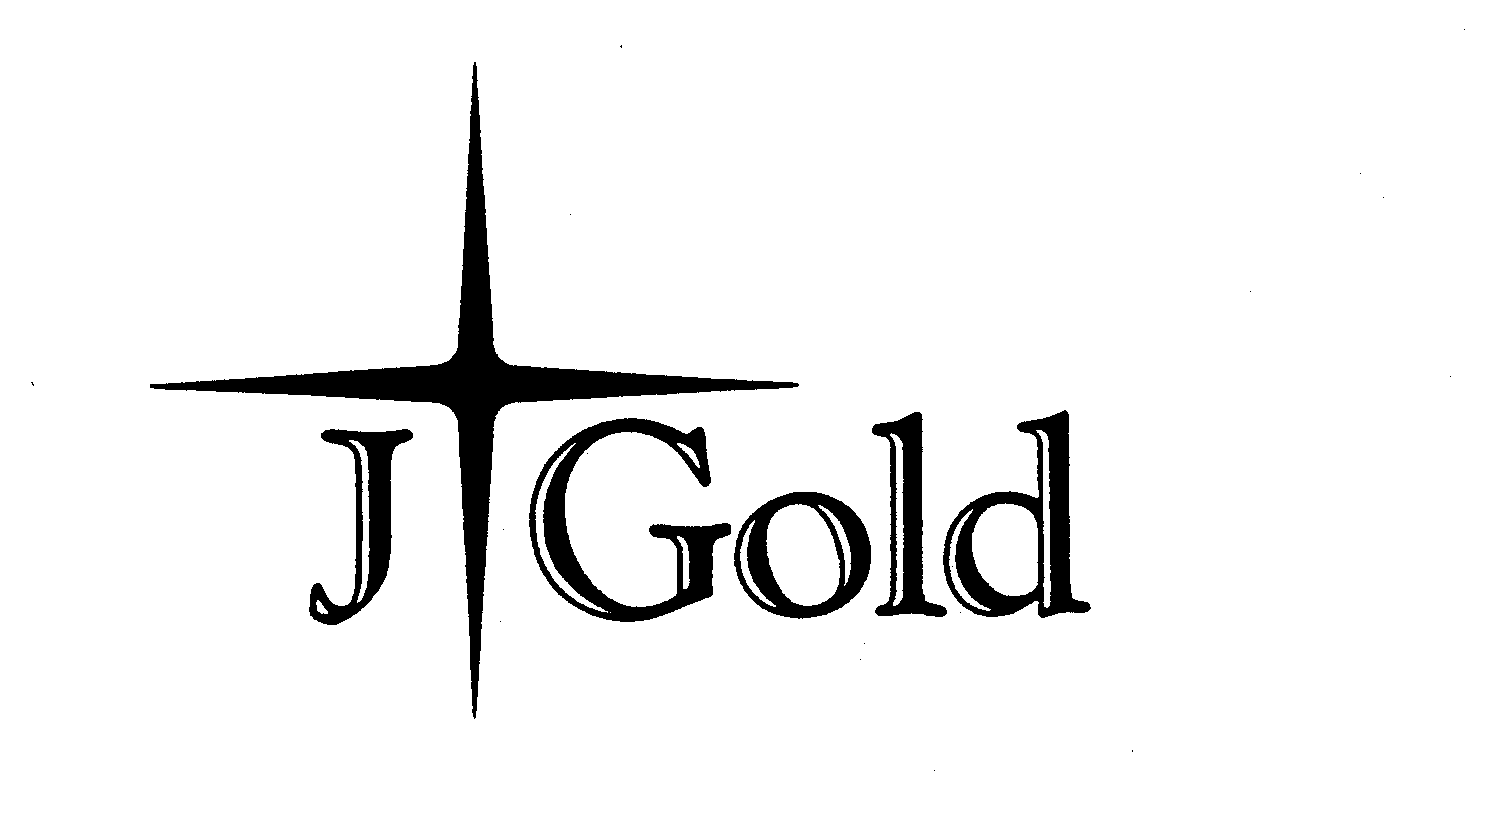  J GOLD